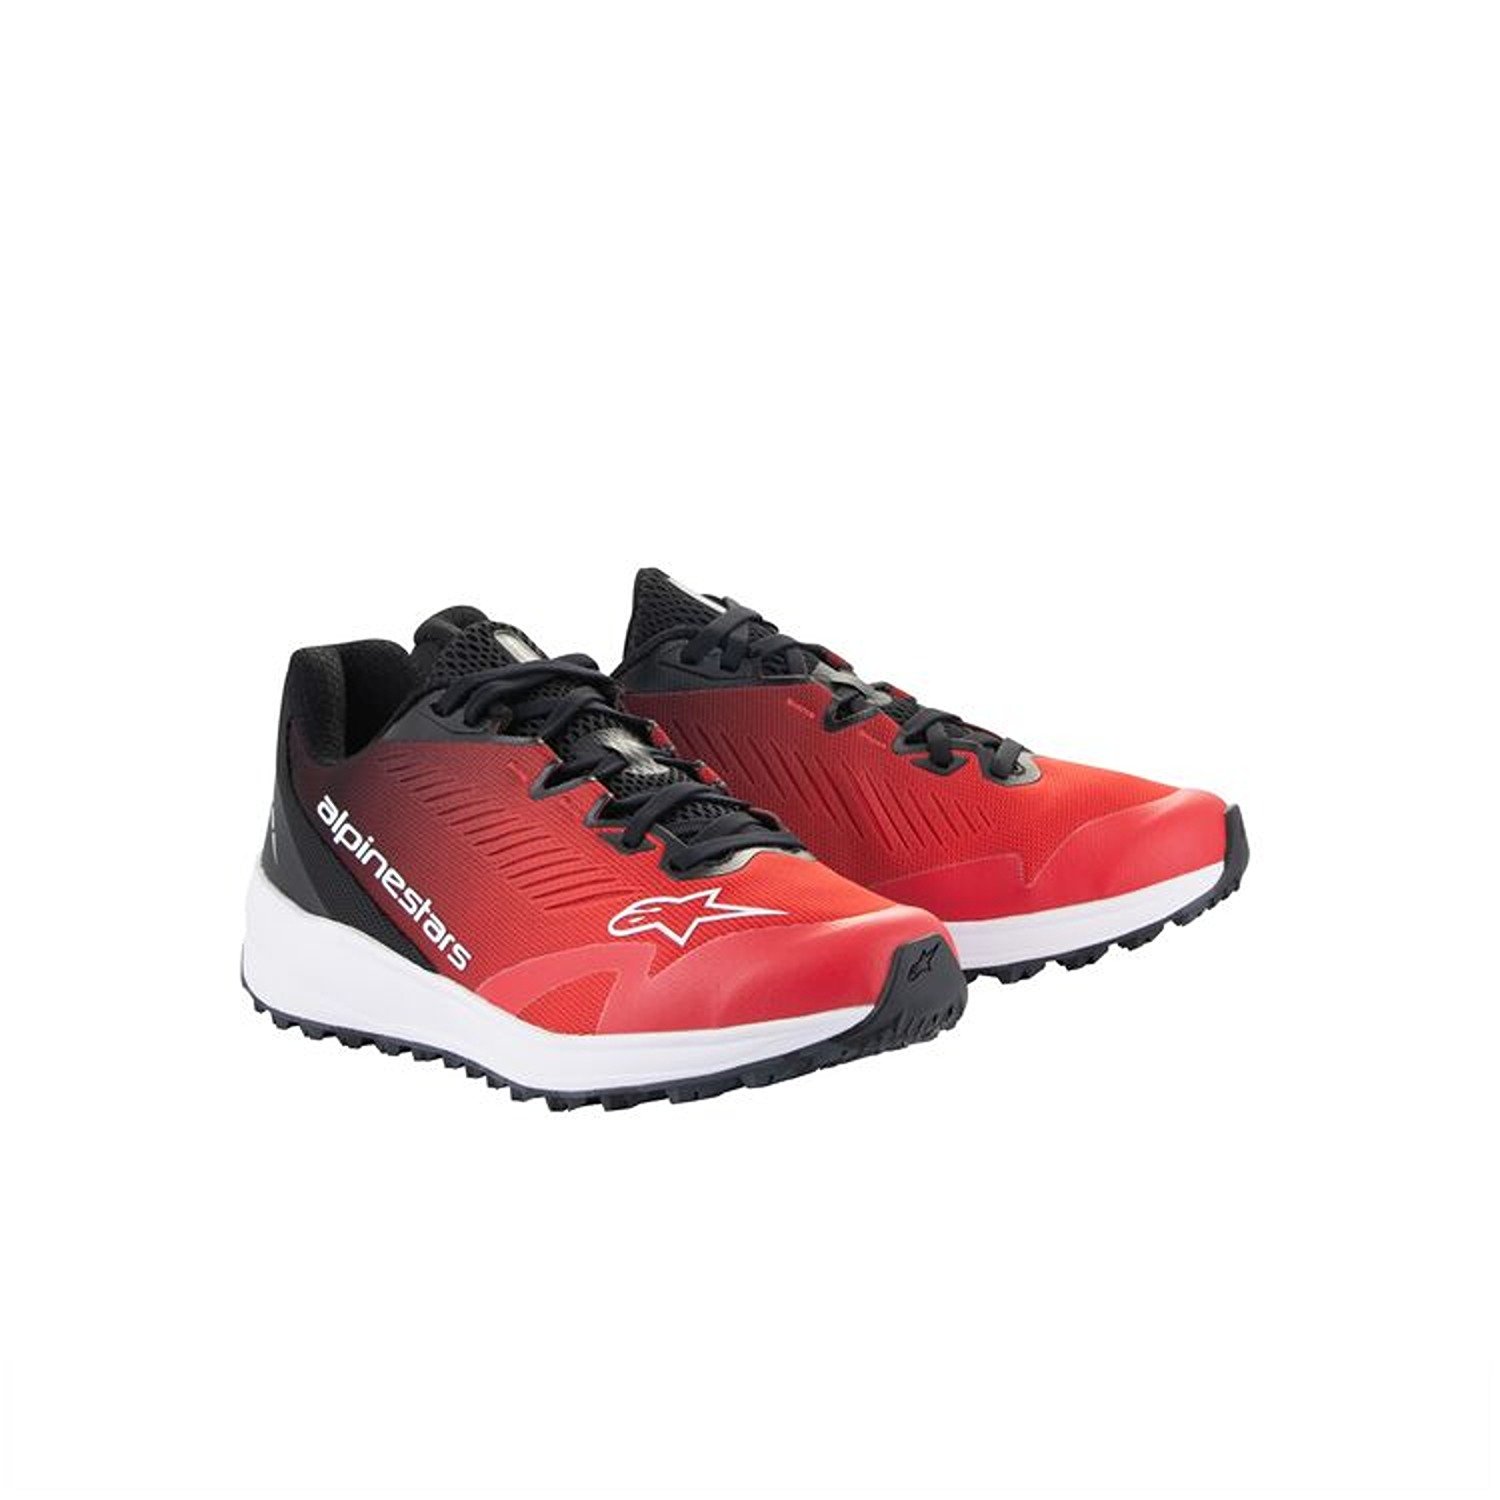 Image of Alpinestars Meta Road V2 Shoes Red Black White Size US 4 EN